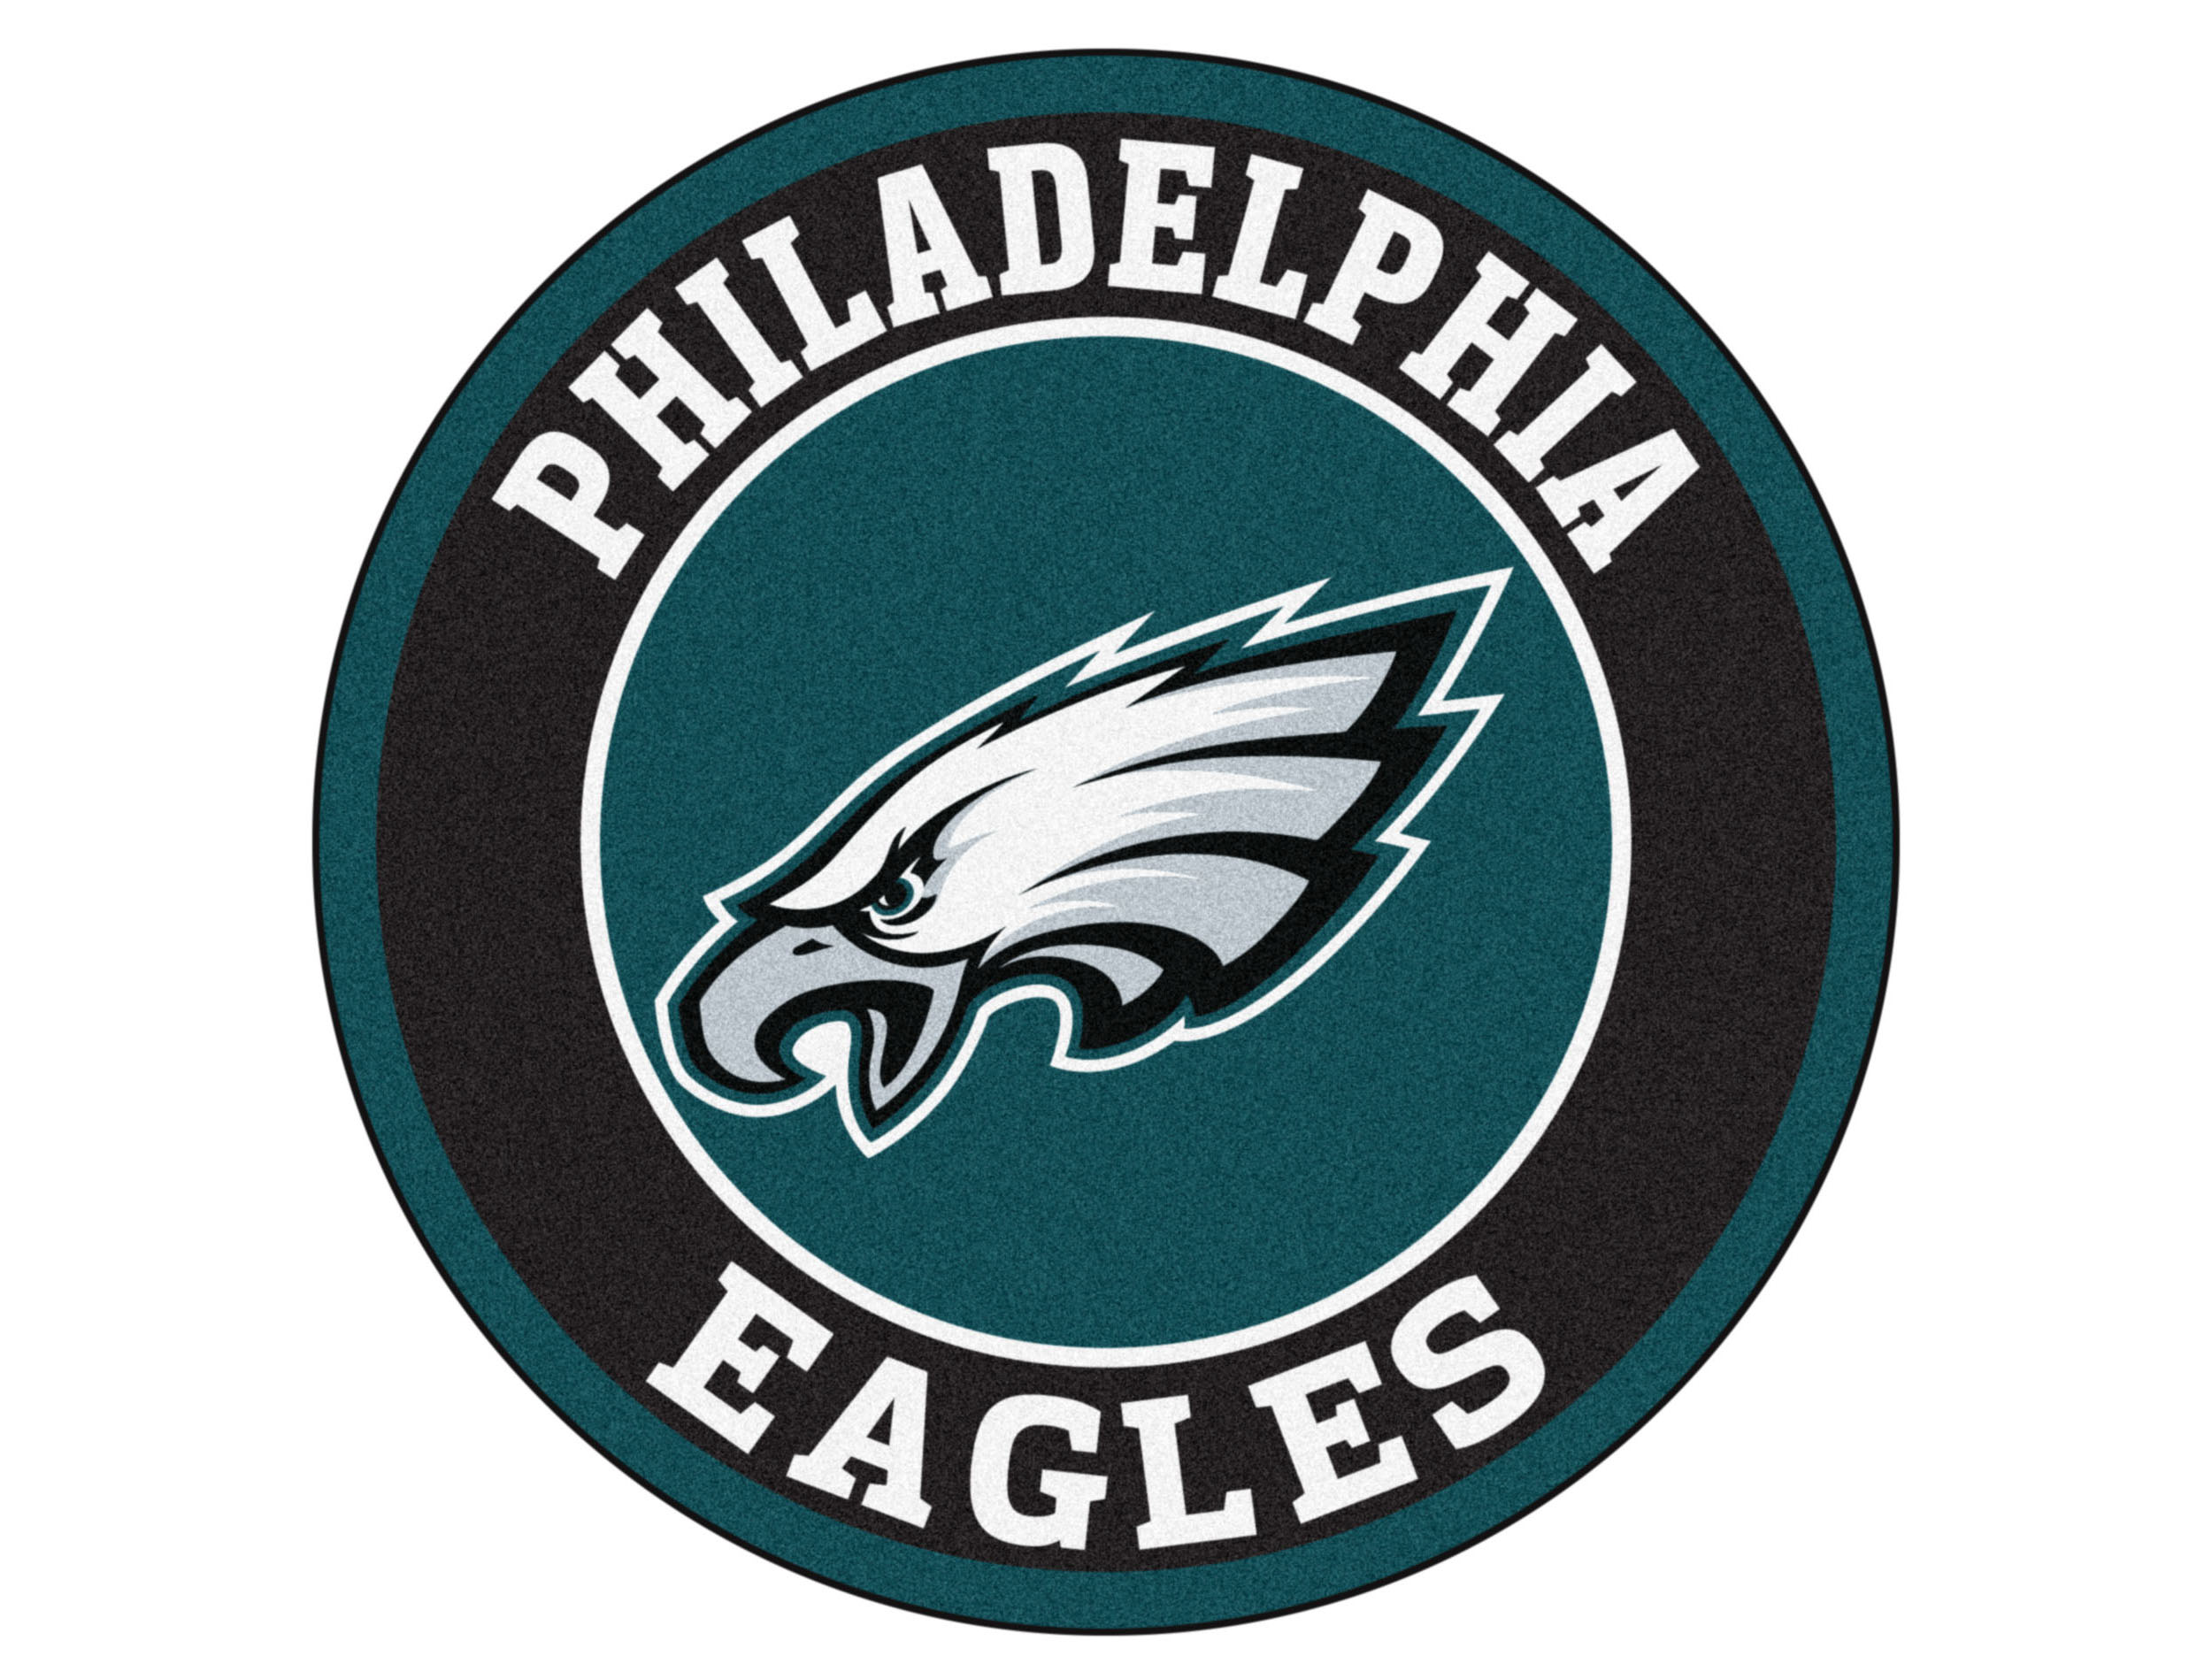 Philadelphia Eagles Pennsylvania NFL Football Team Logo Design